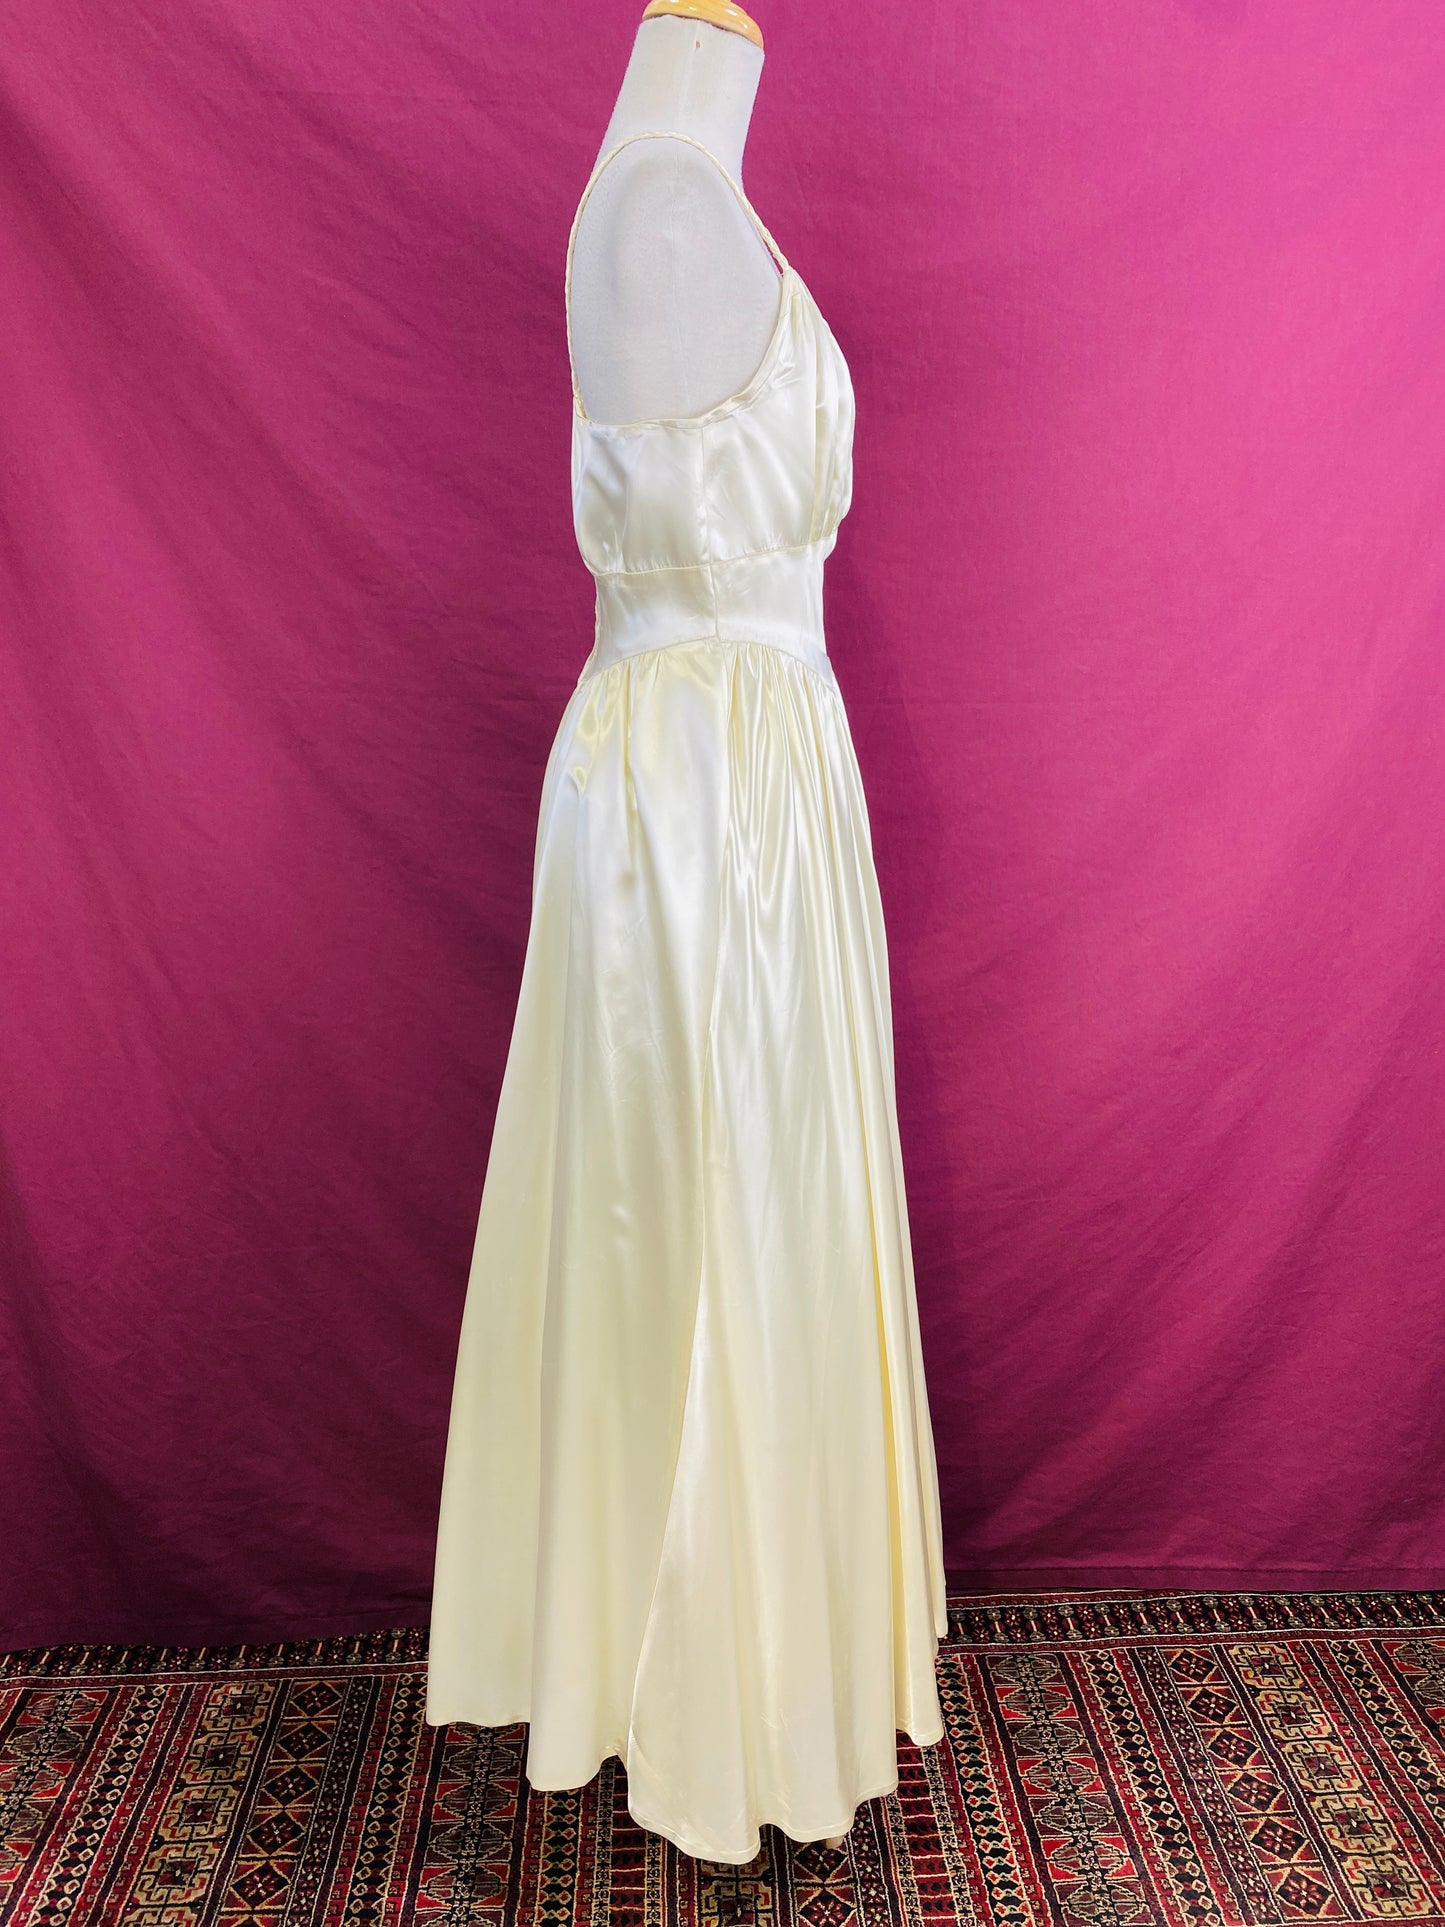 Vintage 1940s Liquid Satin Wedding Dress with Braided Straps, S-M